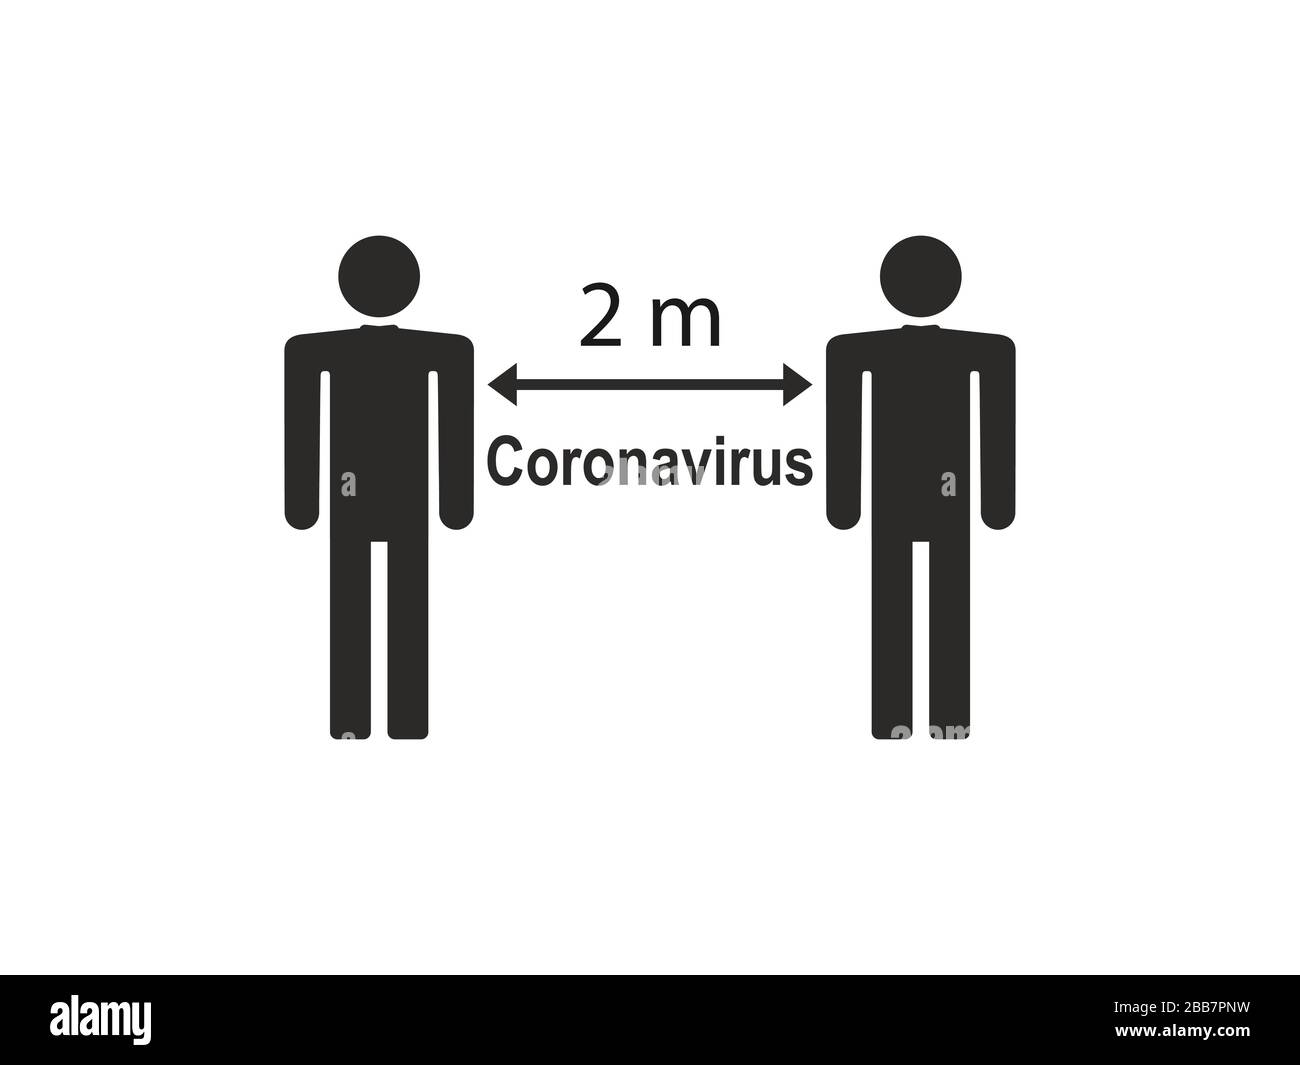 Soziale Distanz, Coronavirus. Vektorgrafiken, flaches Design. Stock Vektor